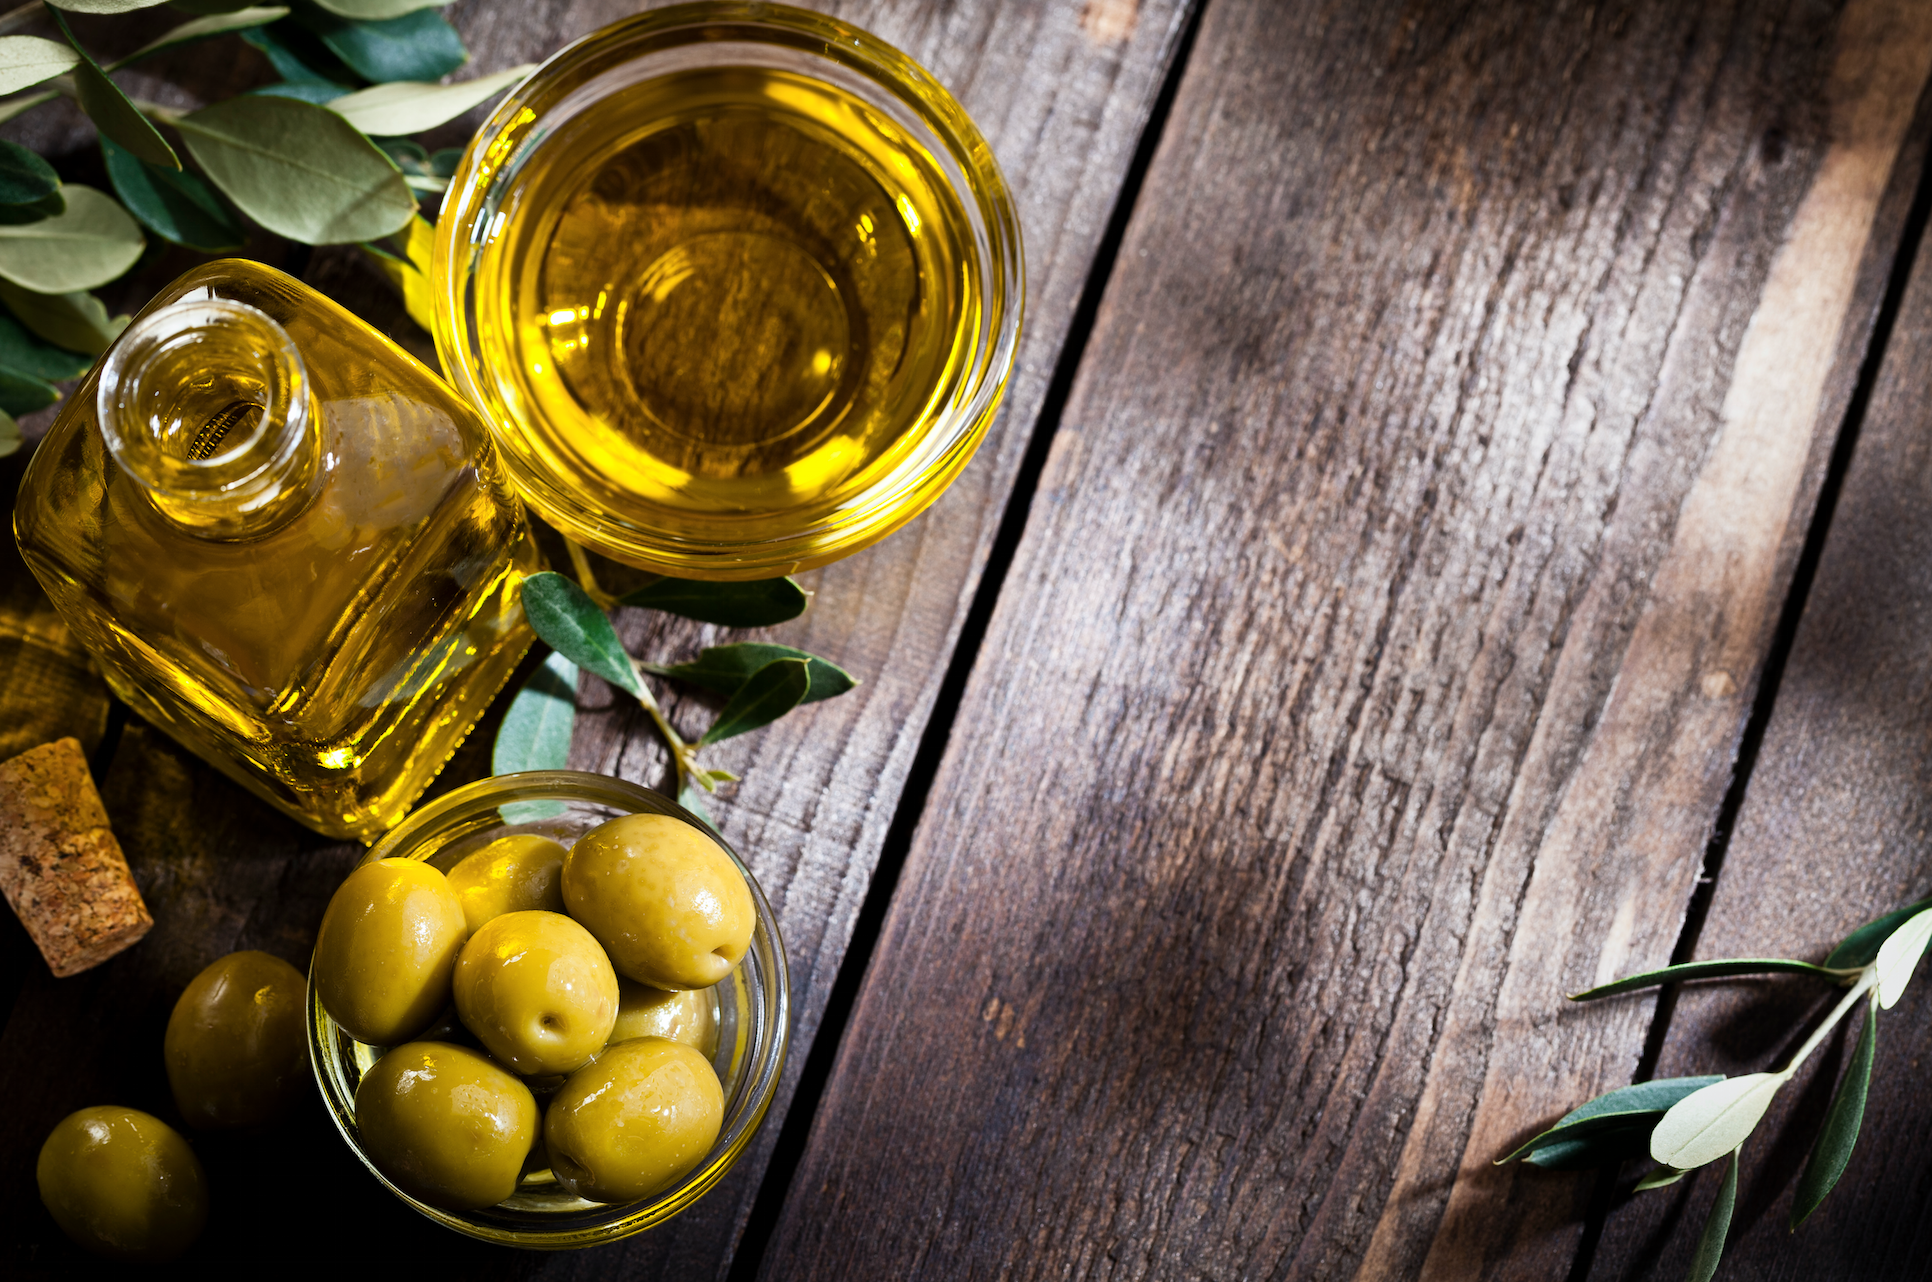 Olive oil has many health benefits